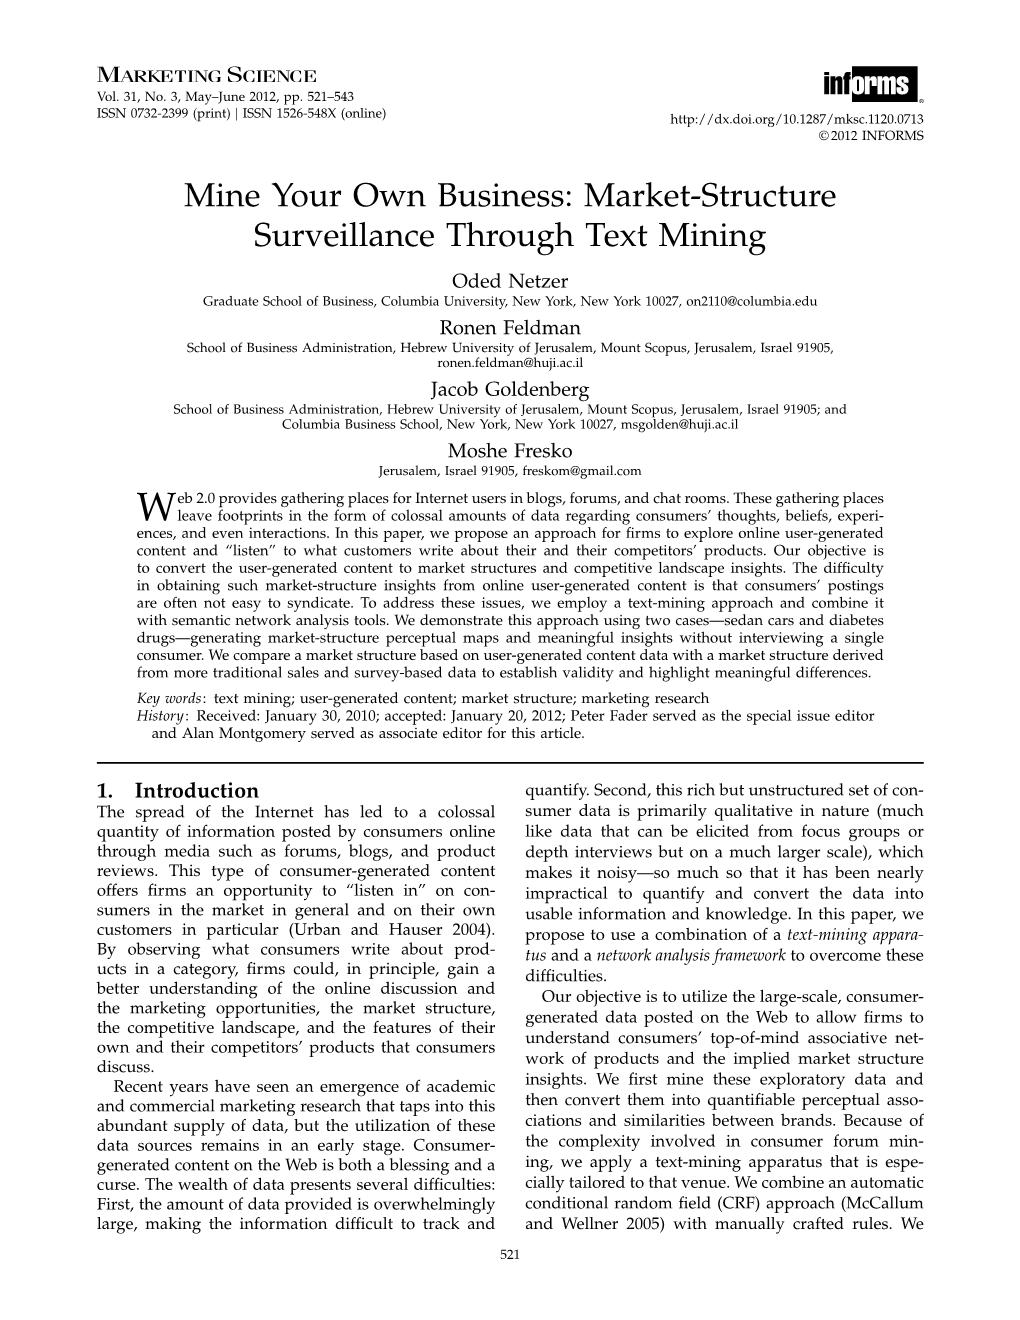 Market-Structure Surveillance Through Text Mining